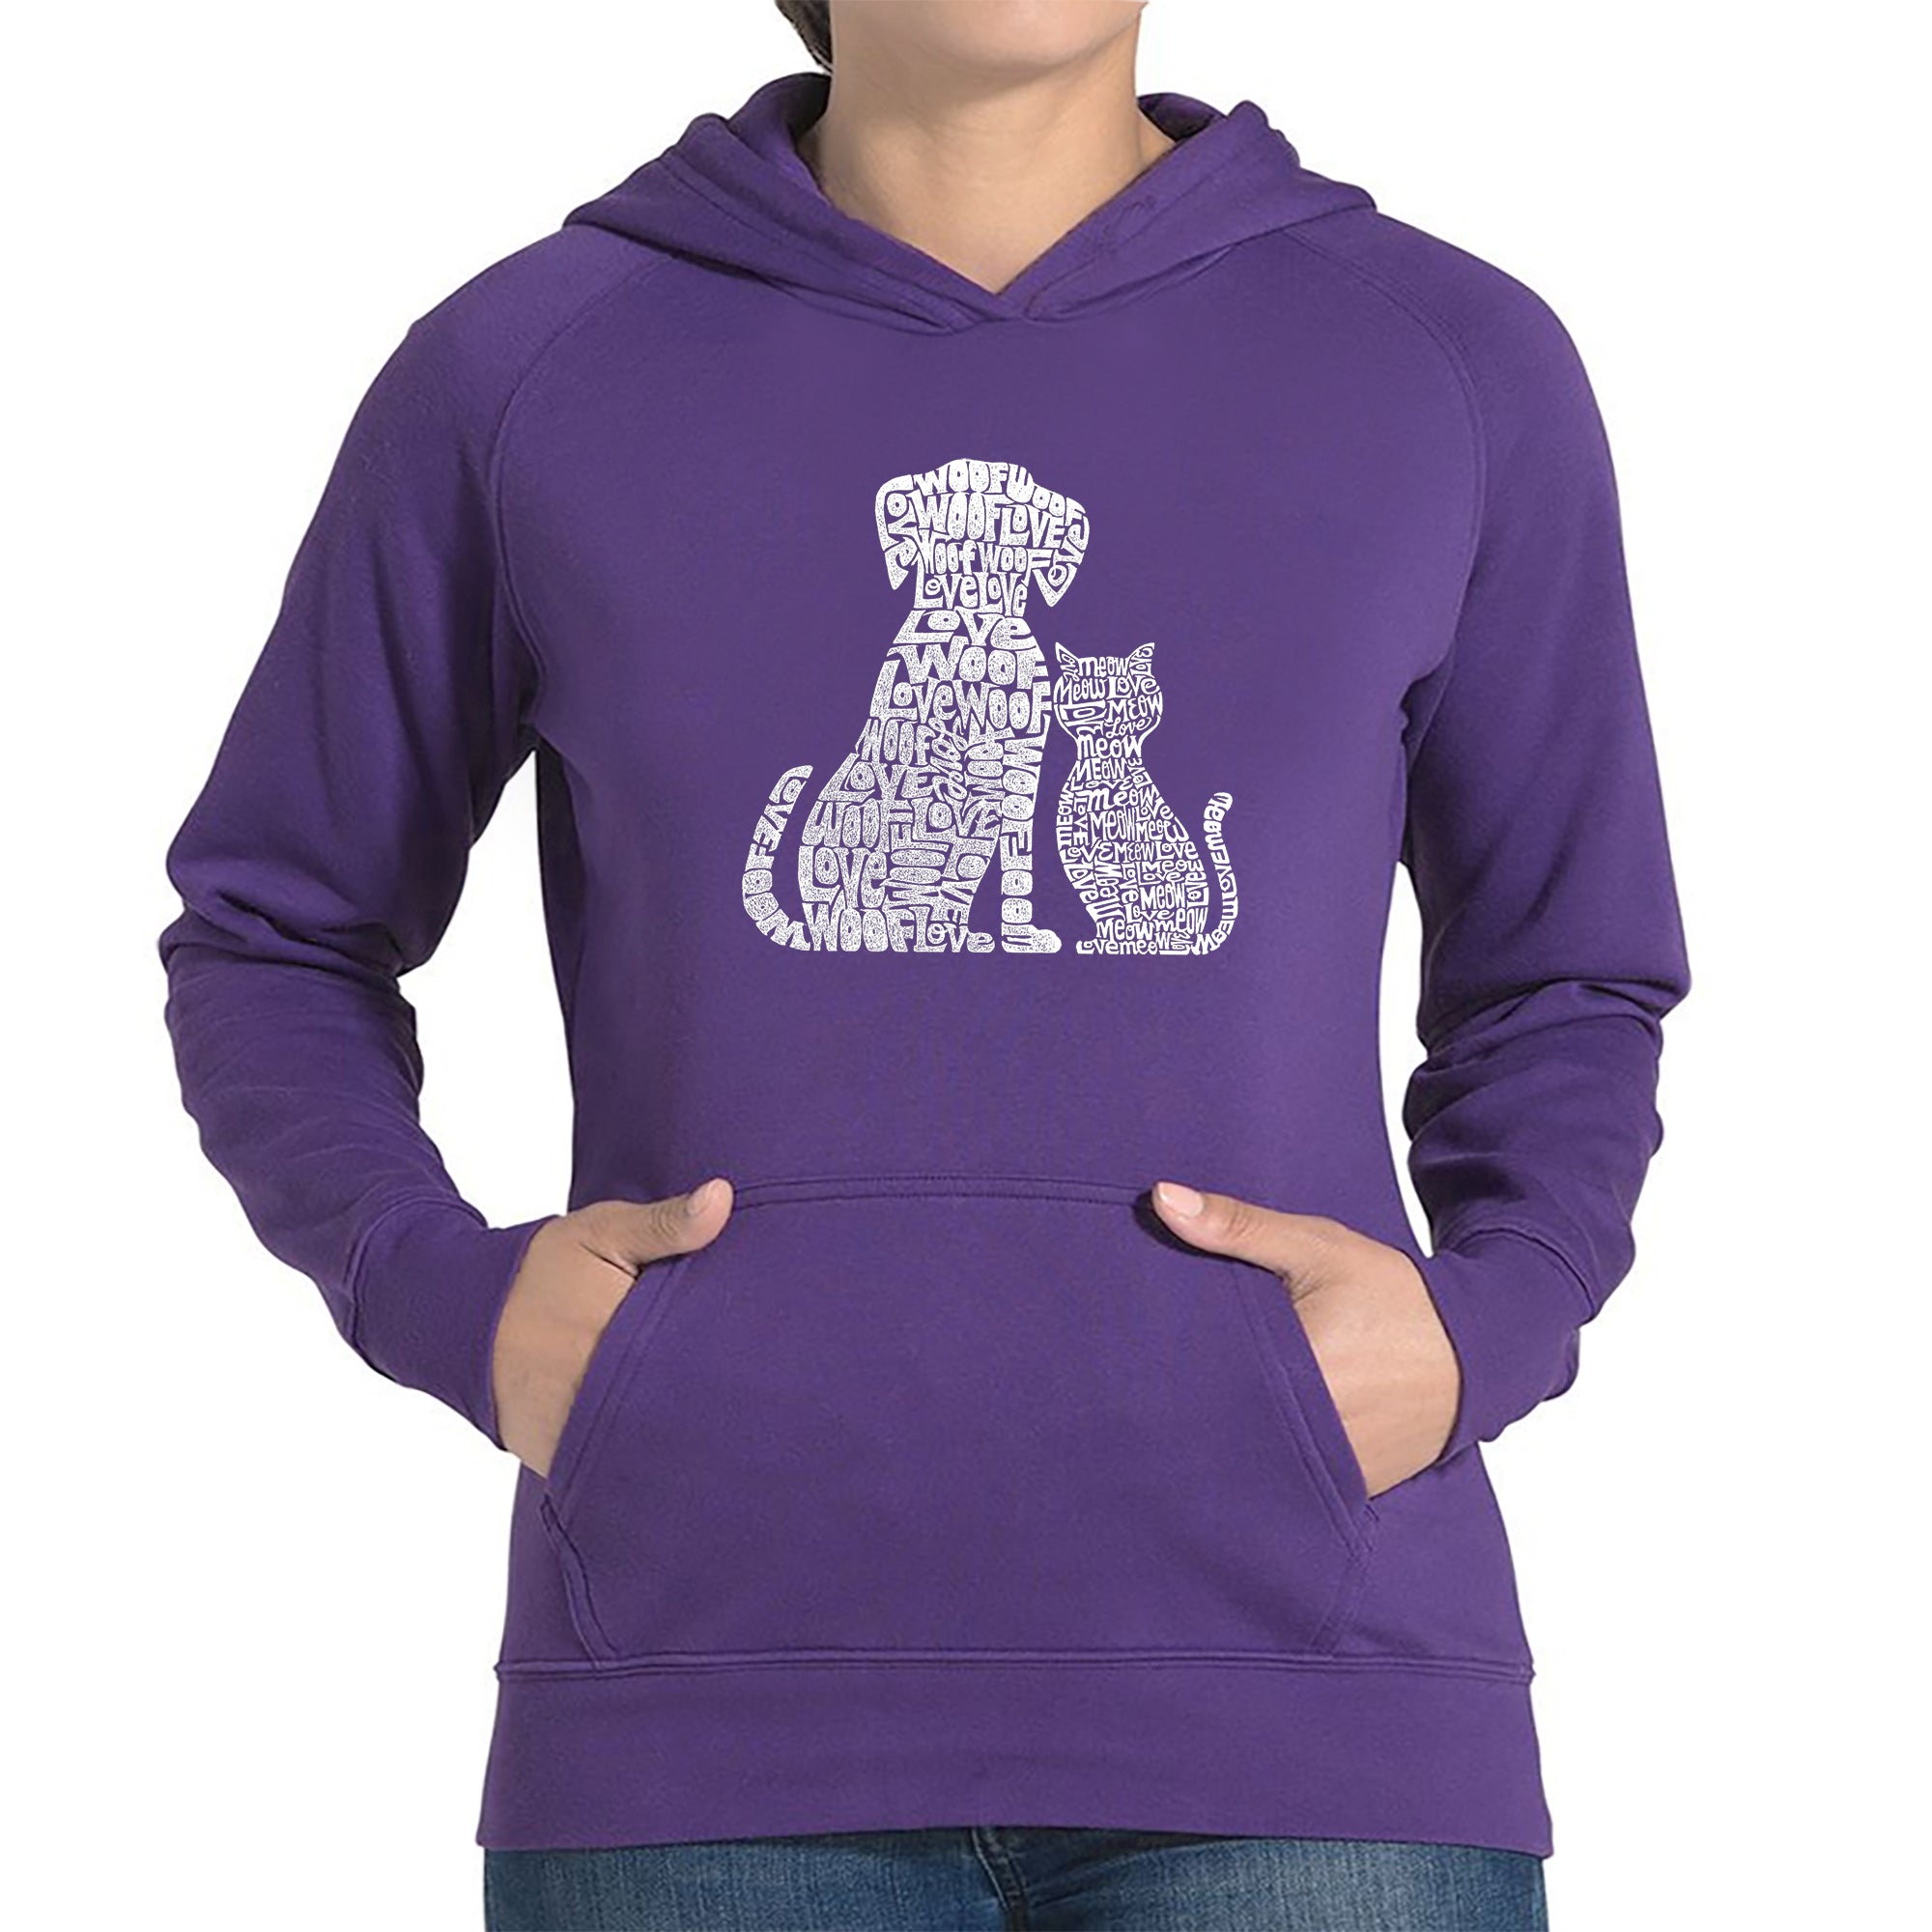 Dogs And Cats - Women's Word Art Hooded Sweatshirt - Purple - Small